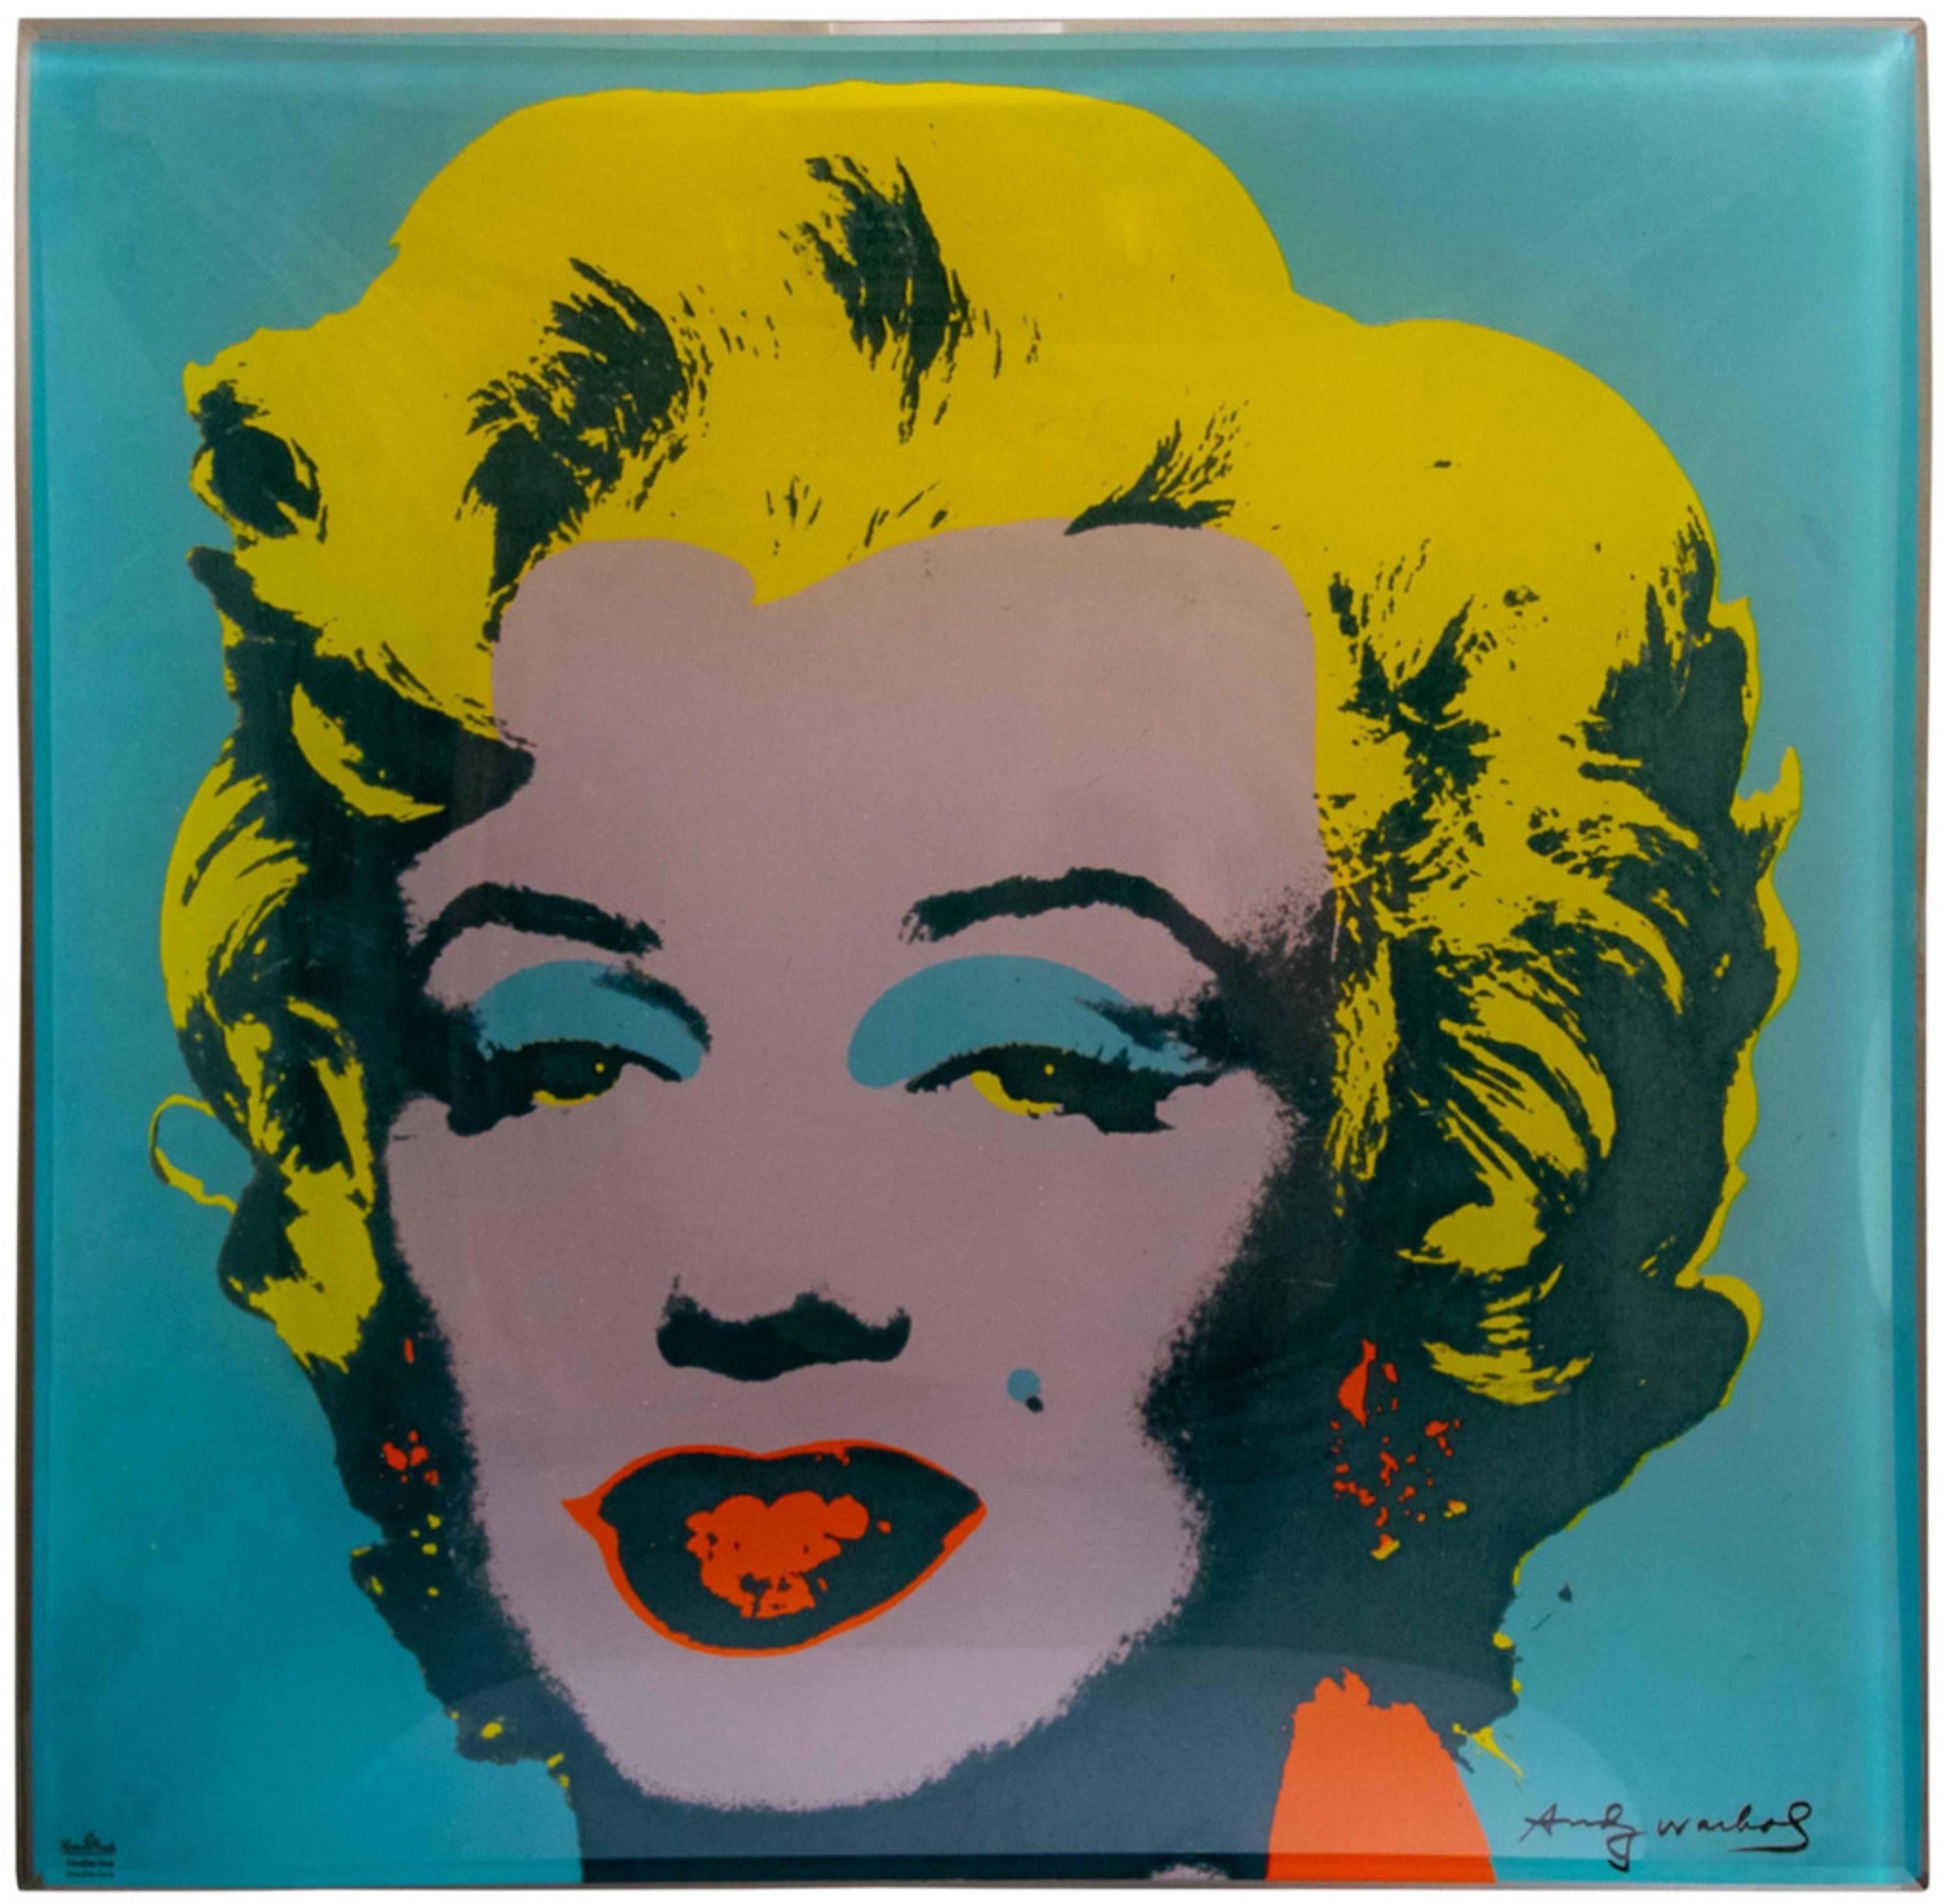 Andy Warhol Portrait Print - Marilyn Monroe Limited Edition Plate